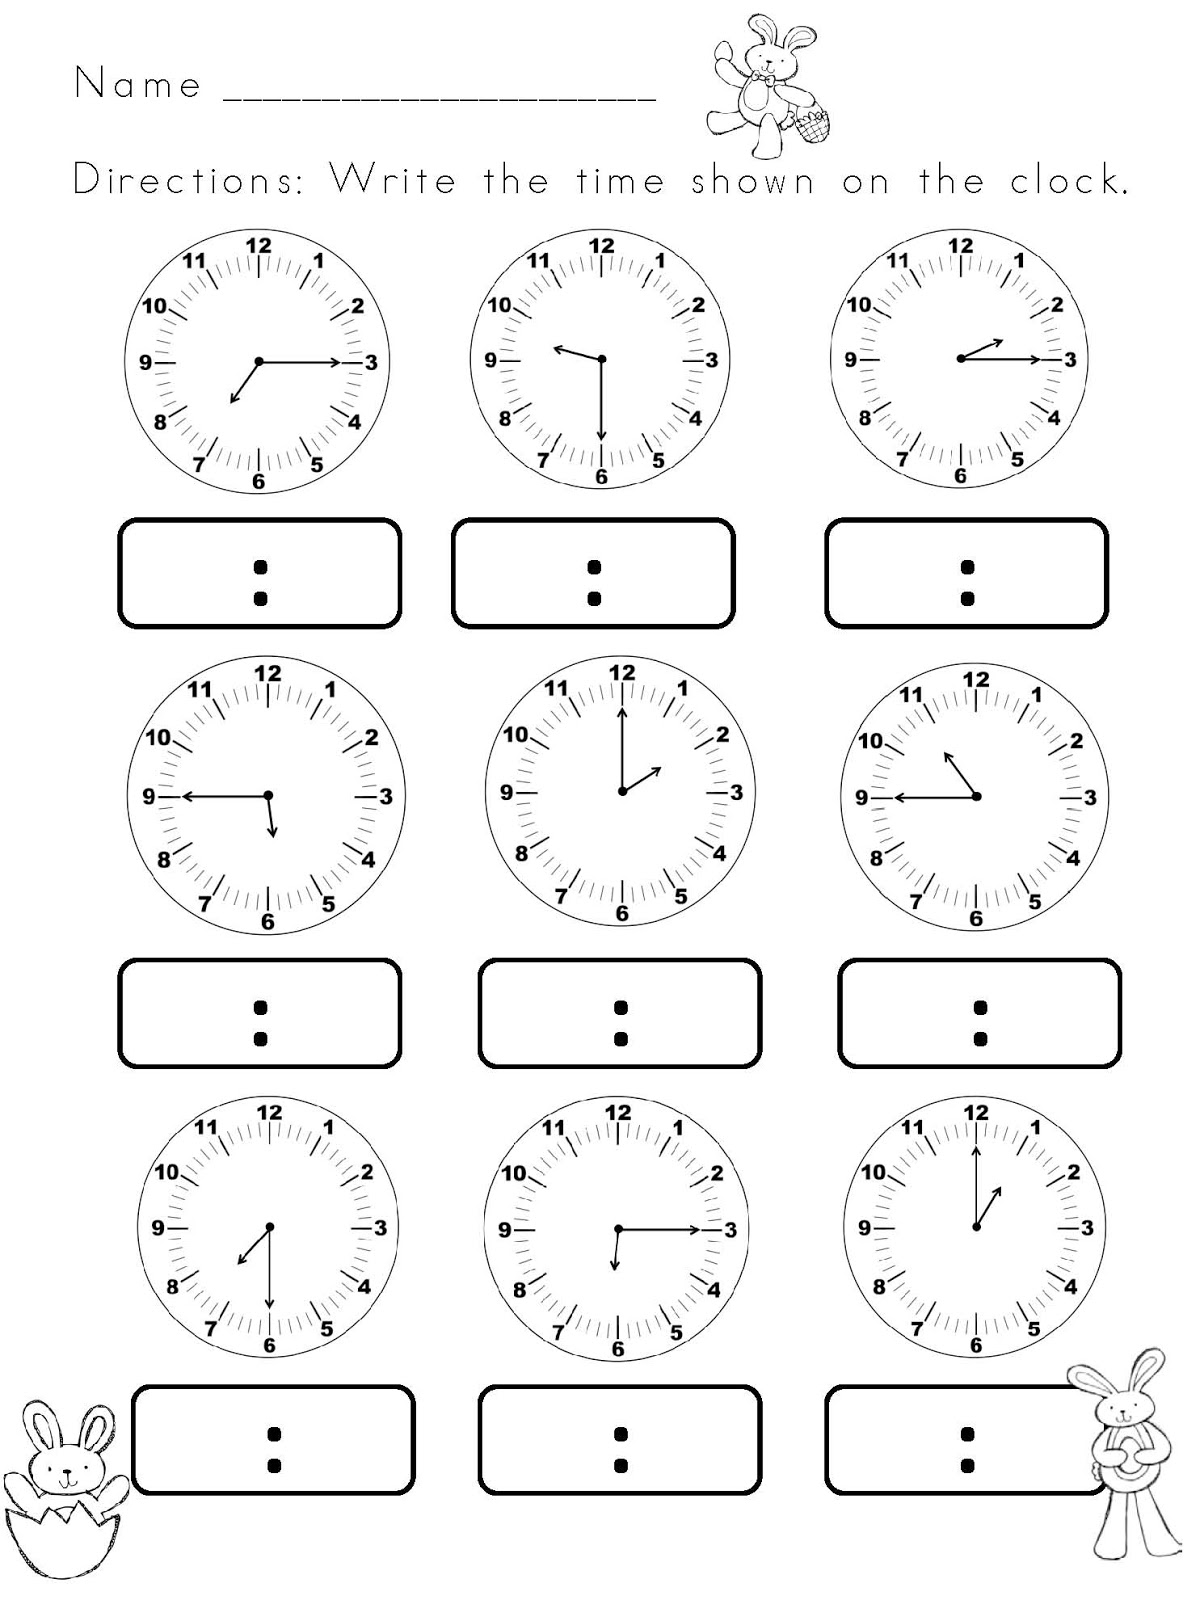 reading-clocks-worksheet